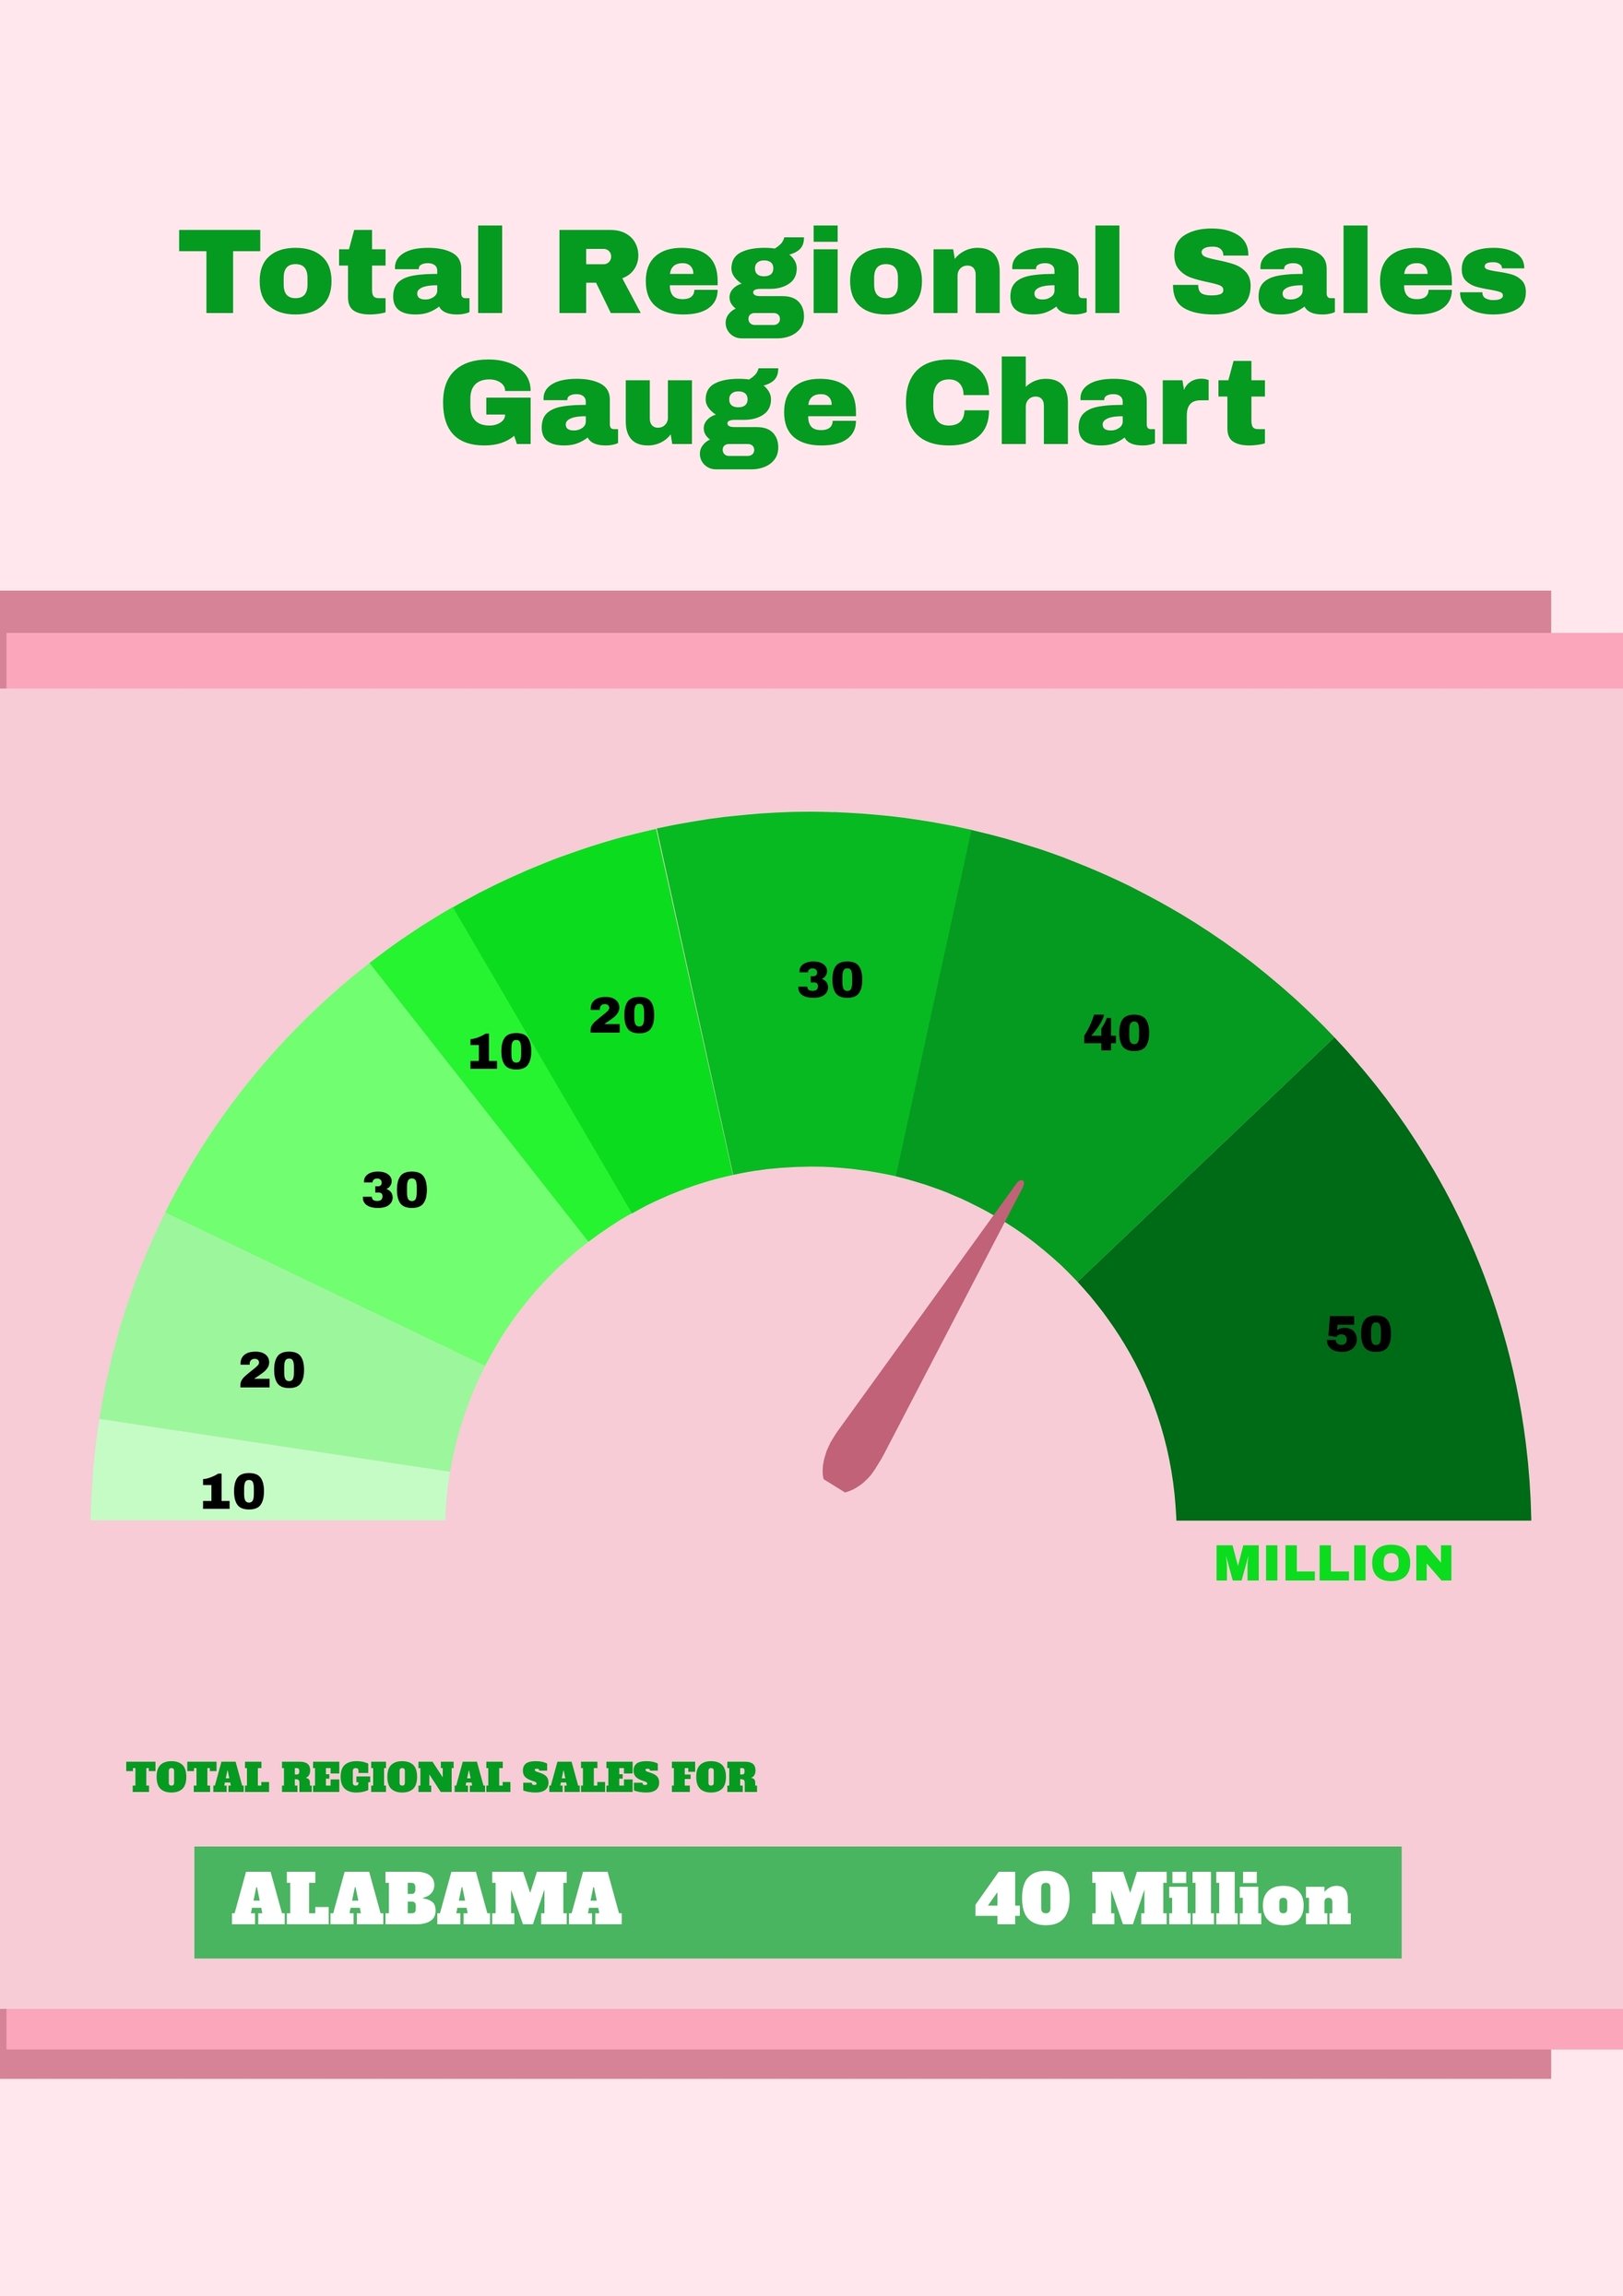 Total Regional Sales Gauge Chart in PDF, Illustrator